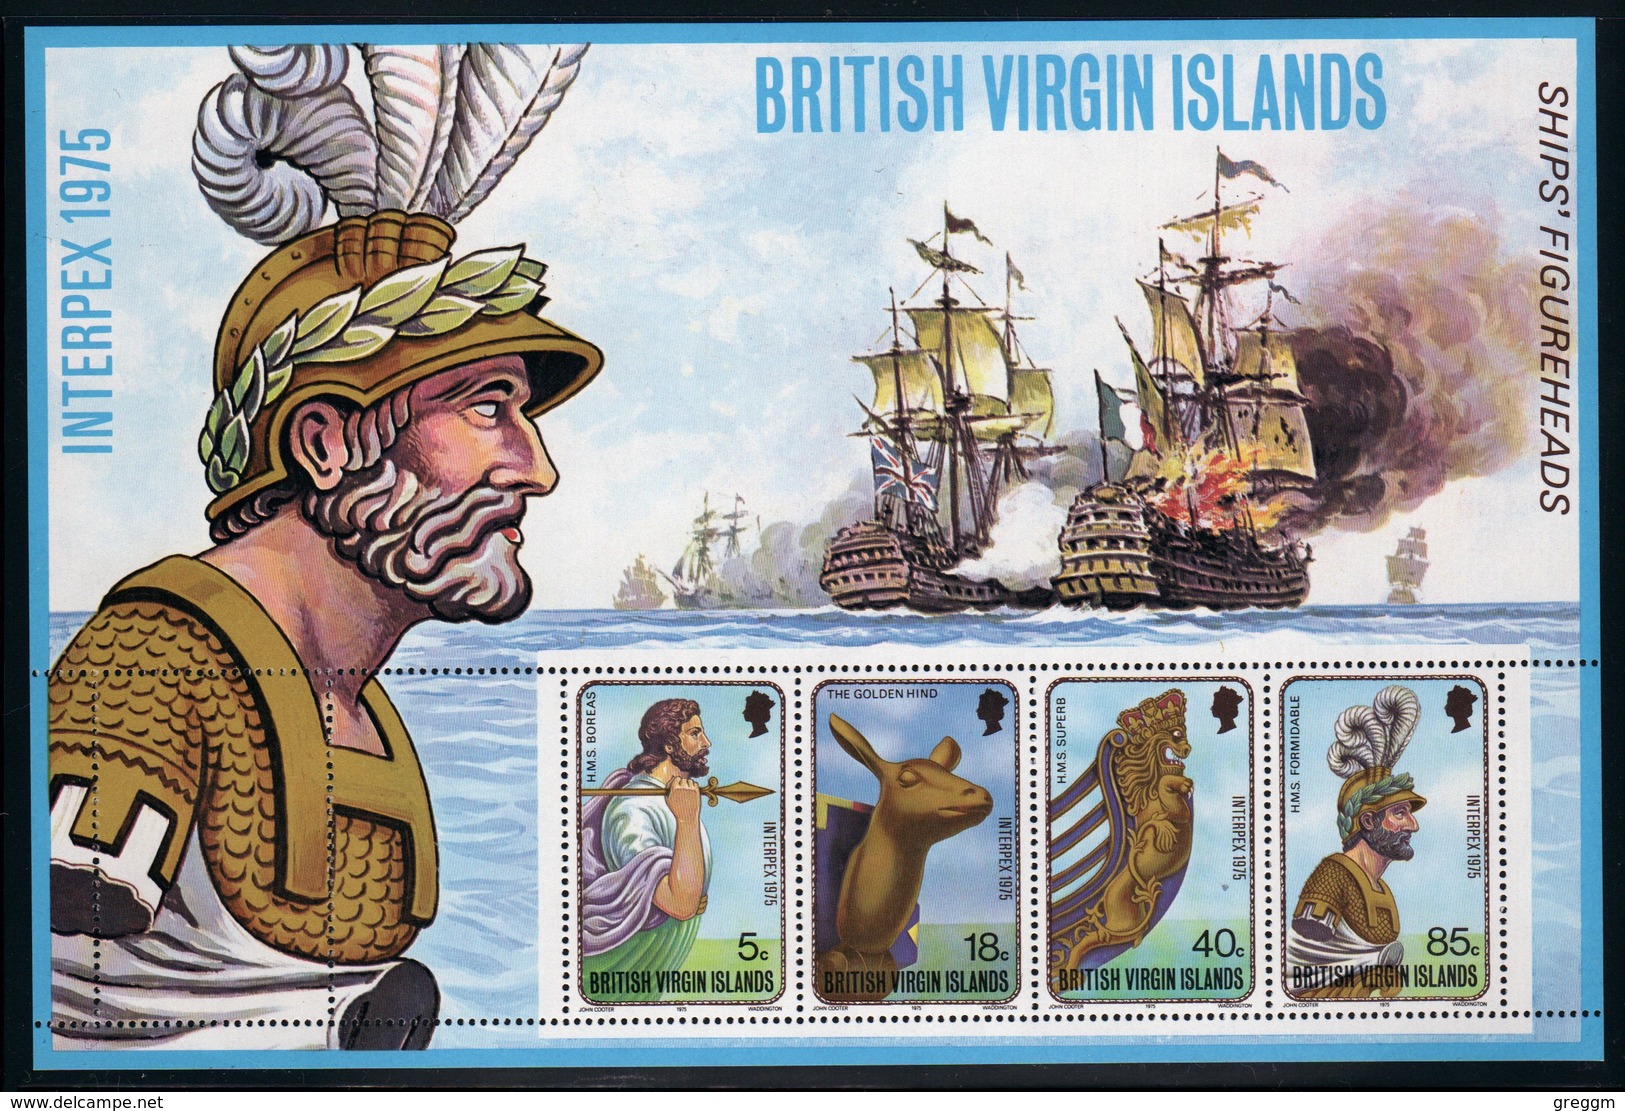 British Virgin Islands 1975 Queen Elizabeth Mini Sheet Celebrating Interpex 75 (Ships Figureheads) Upright Watermark. - British Virgin Islands